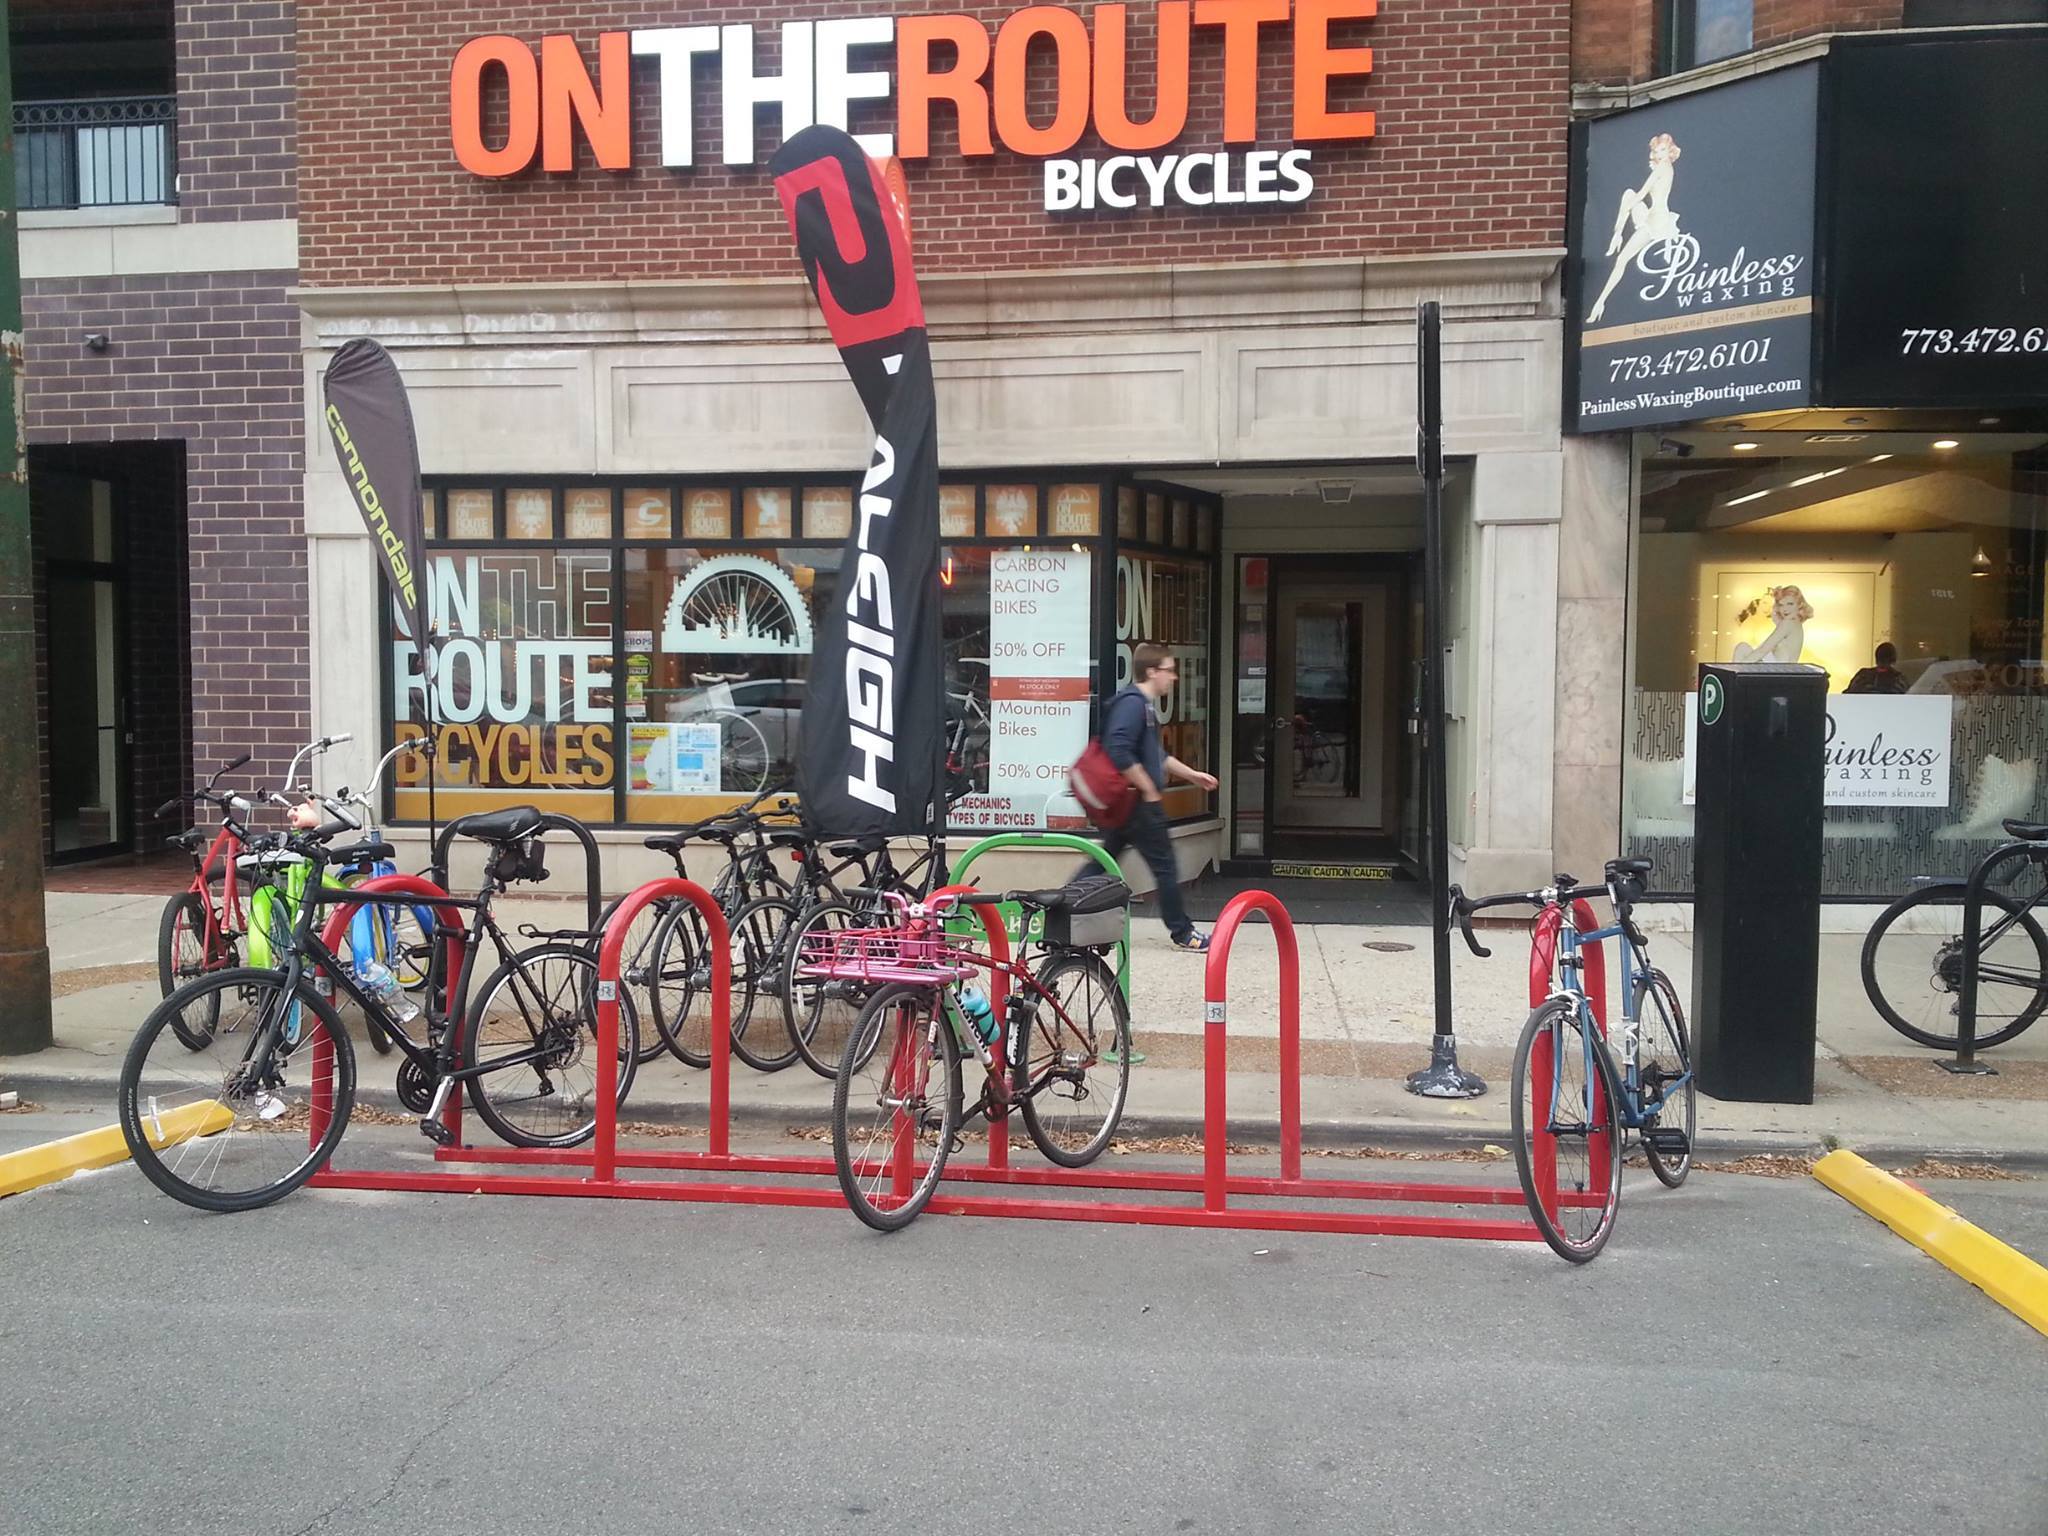 On The Route Bicycles, Bike shop, Bike repair, Bike sales, Chicago, OTR